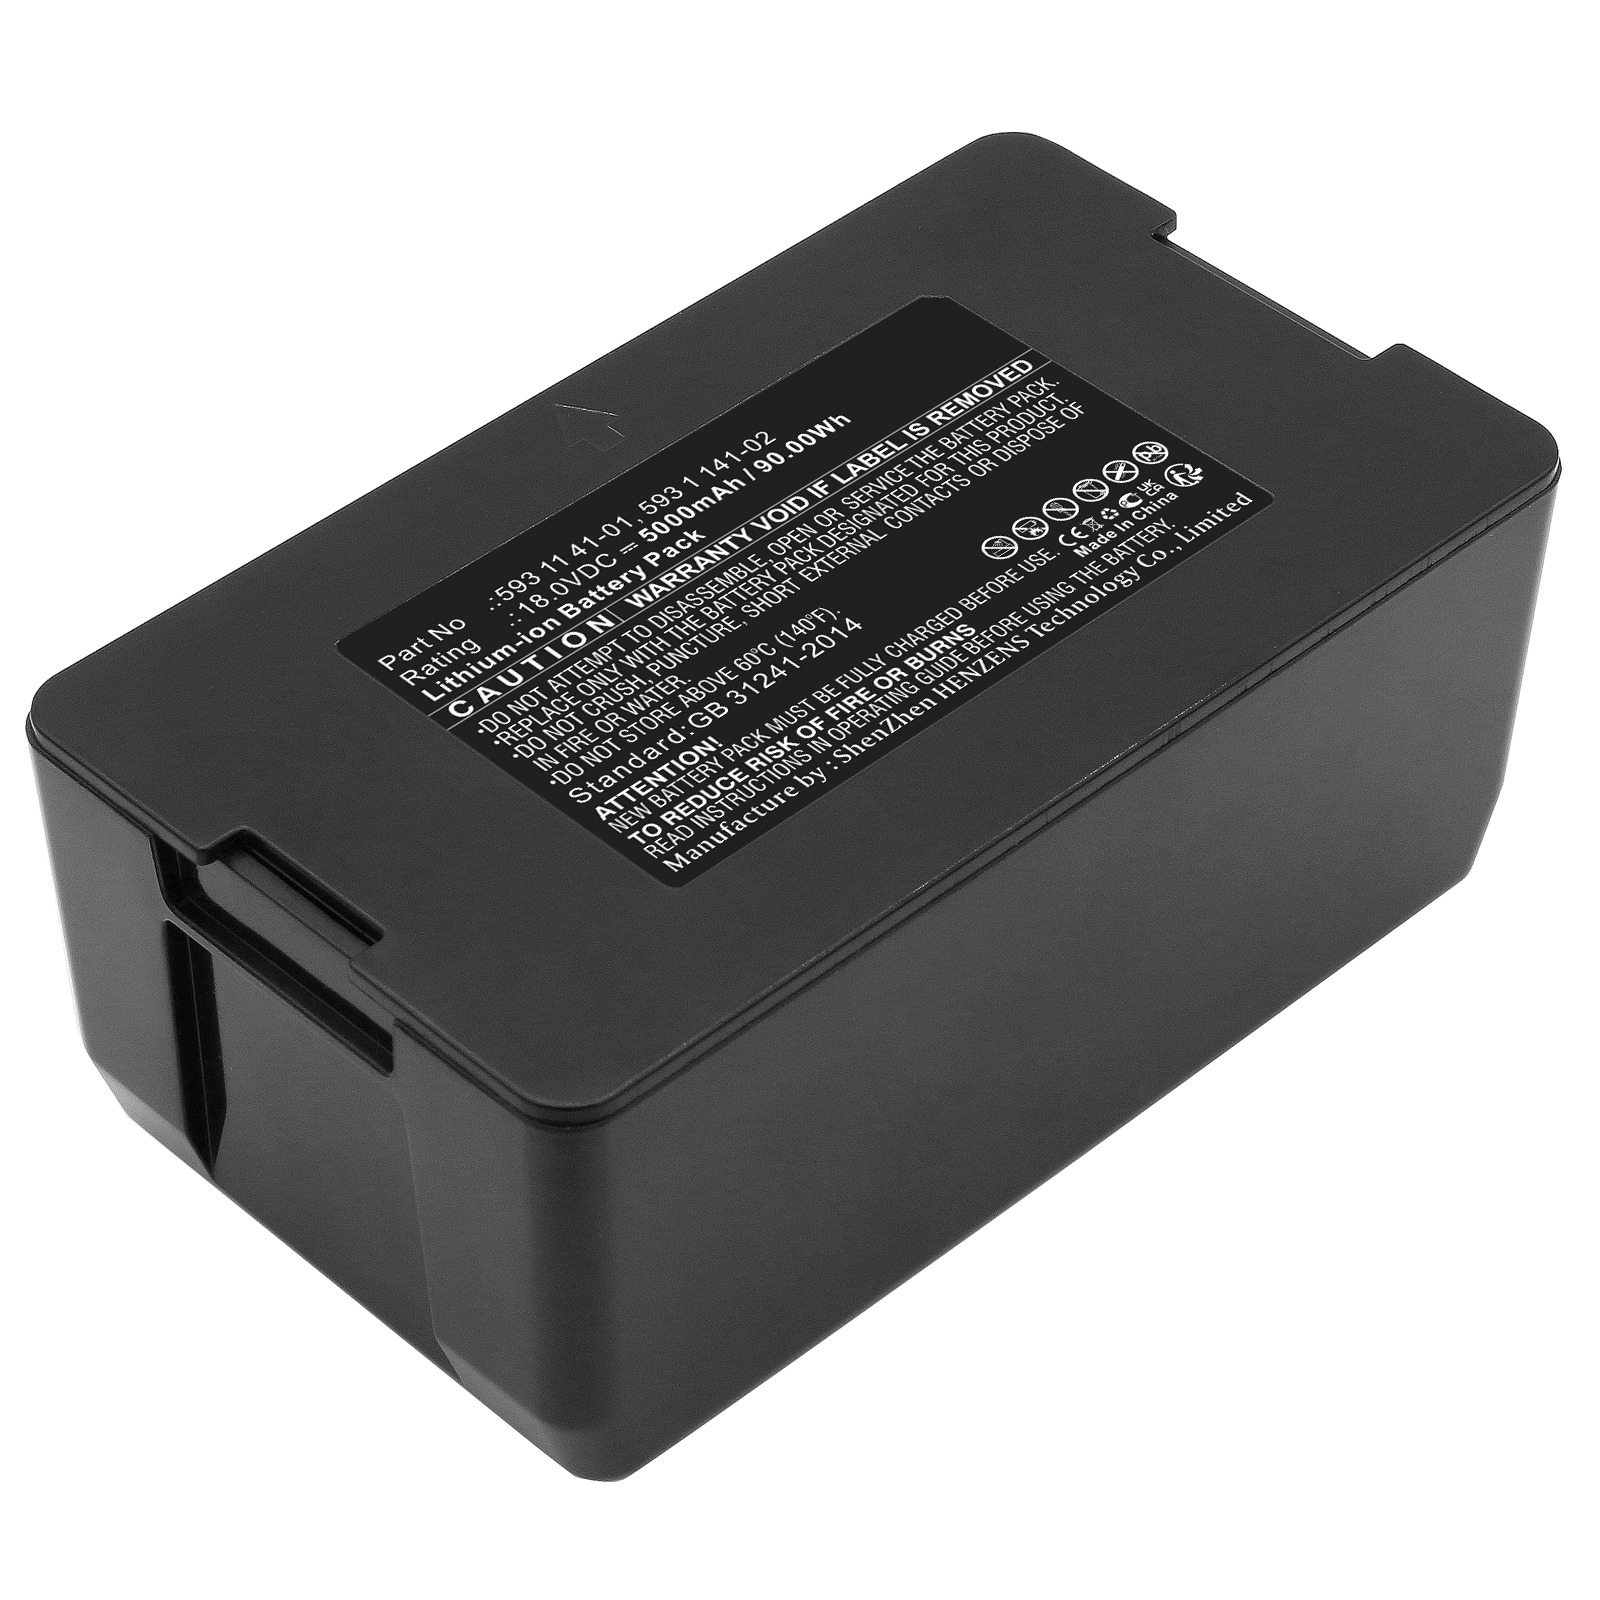 Synergy Digital Lawn Mower Battery, Compatible with Husqvarna 593 1 141-02 Lawn Mower Battery (Li-Ion, 18V, 5000mAh)